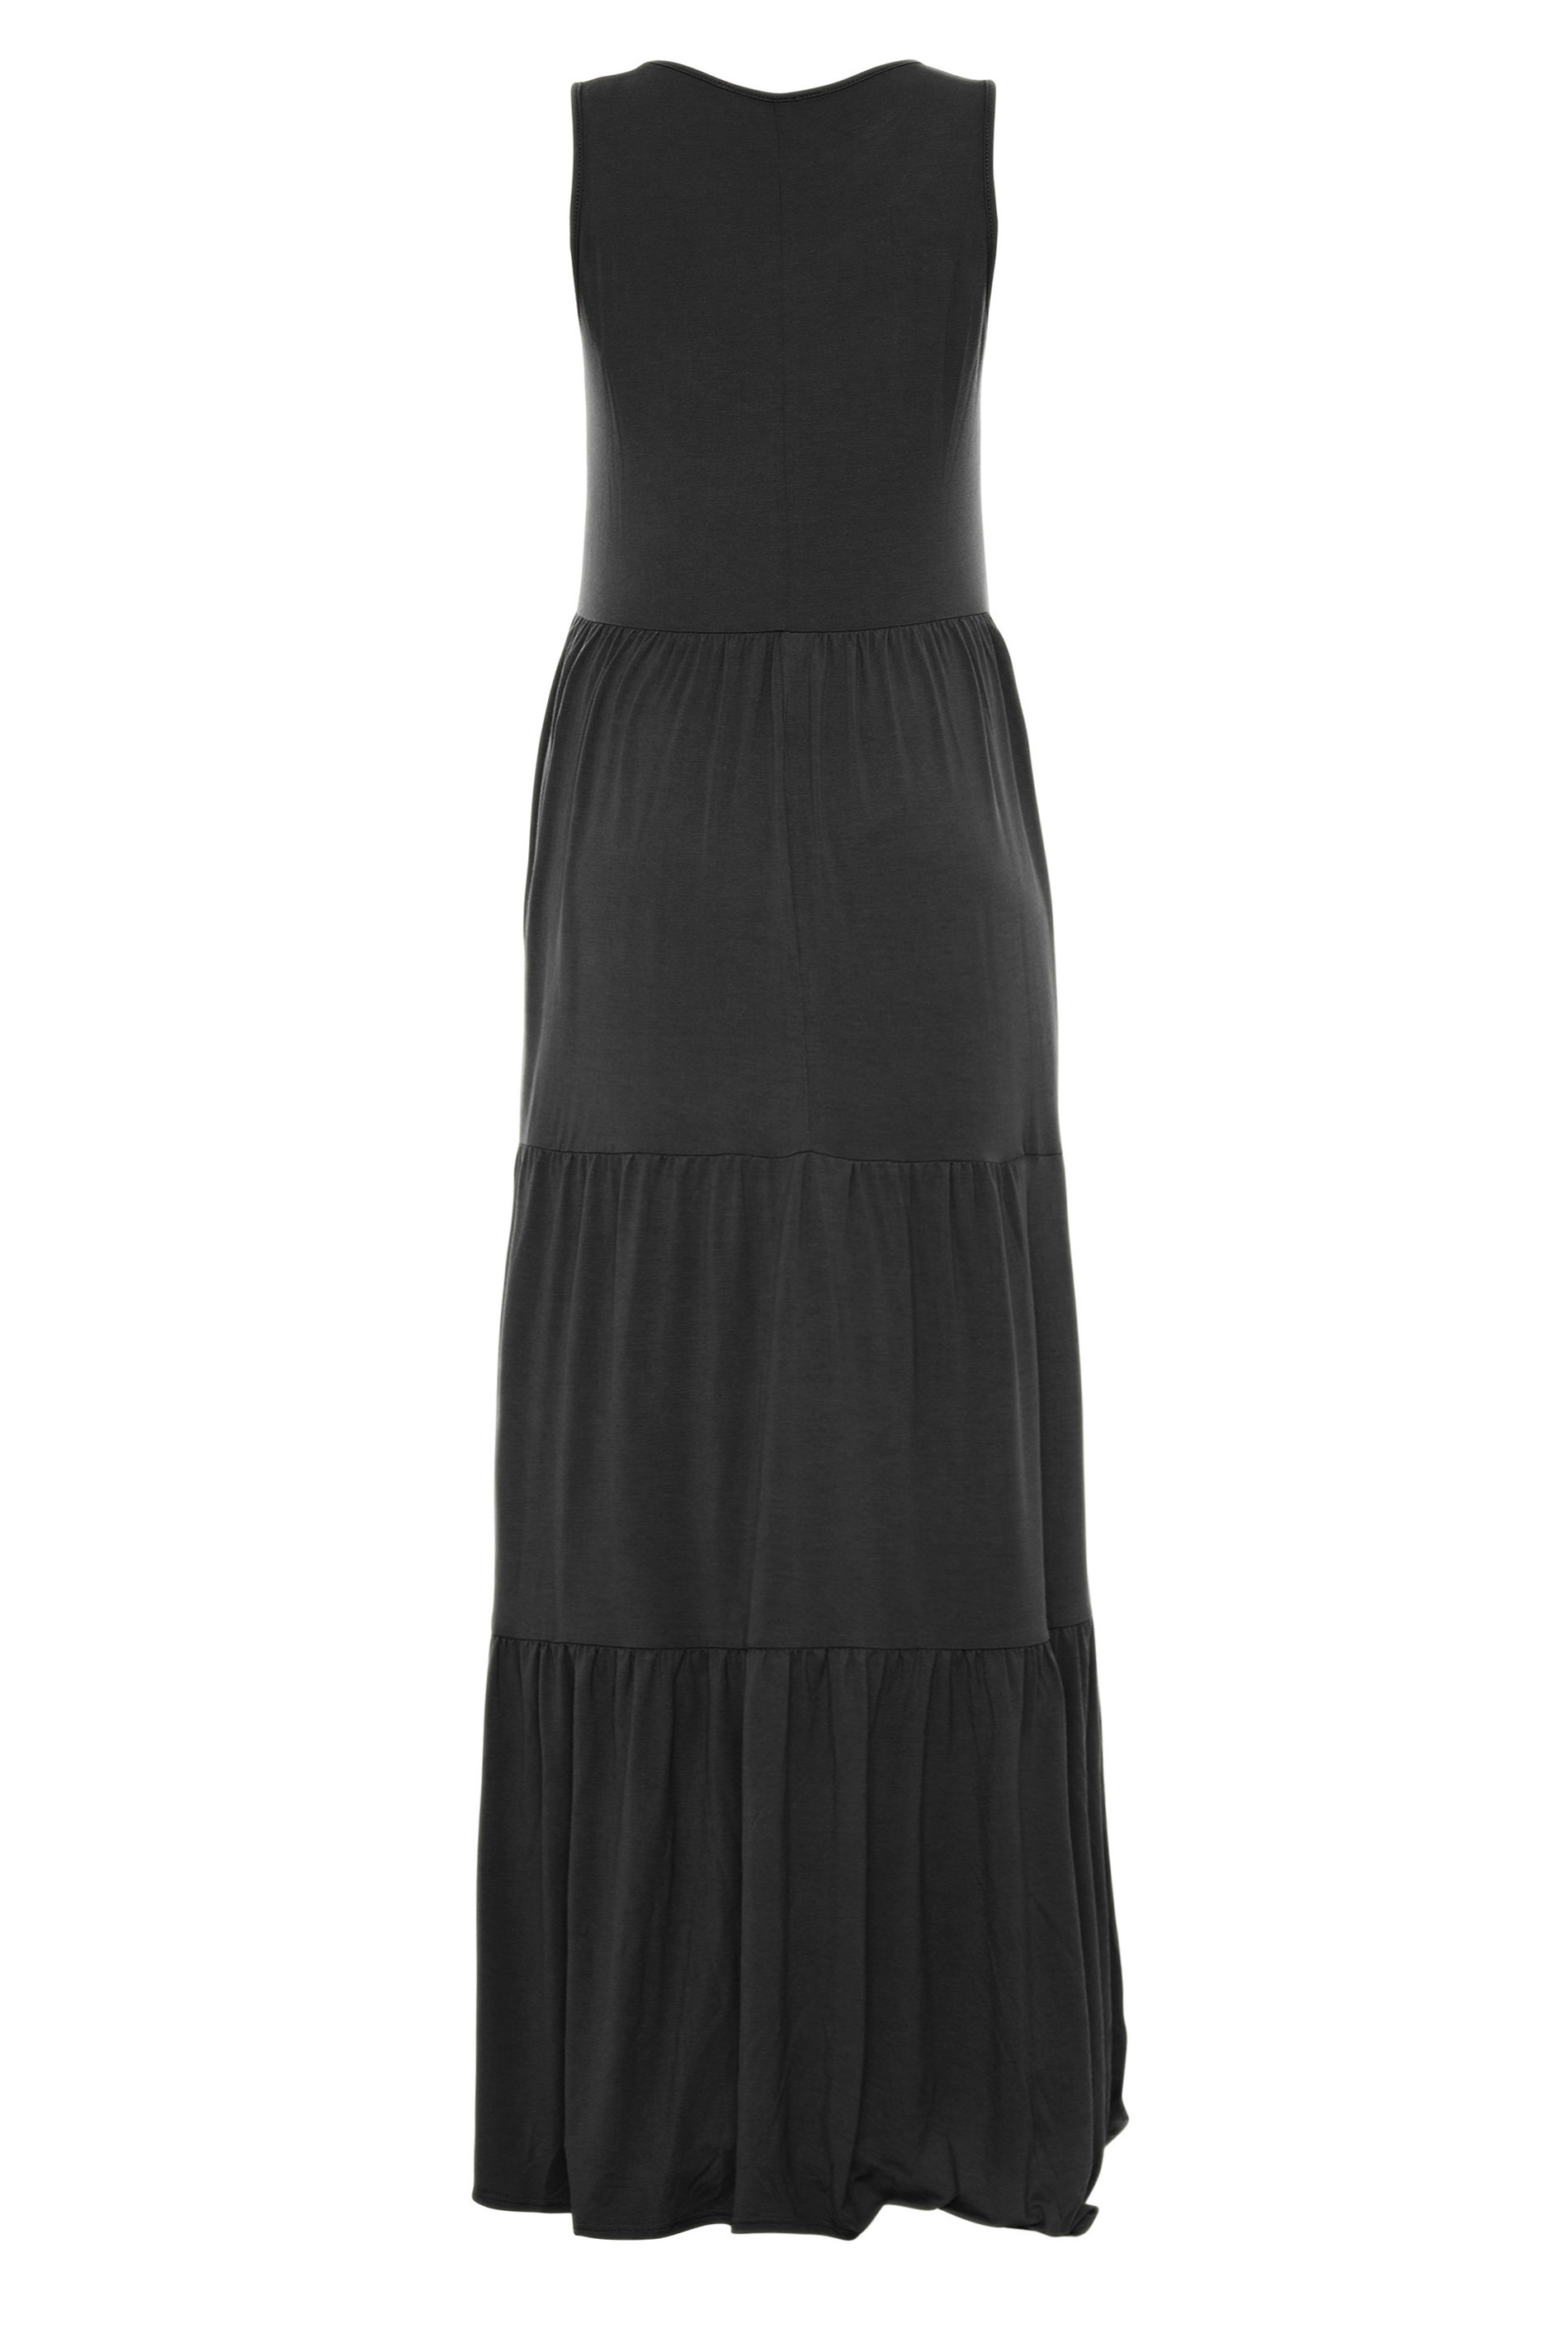 LTS Maternity Black Tiered Maxi Dress | Long Tall Sally